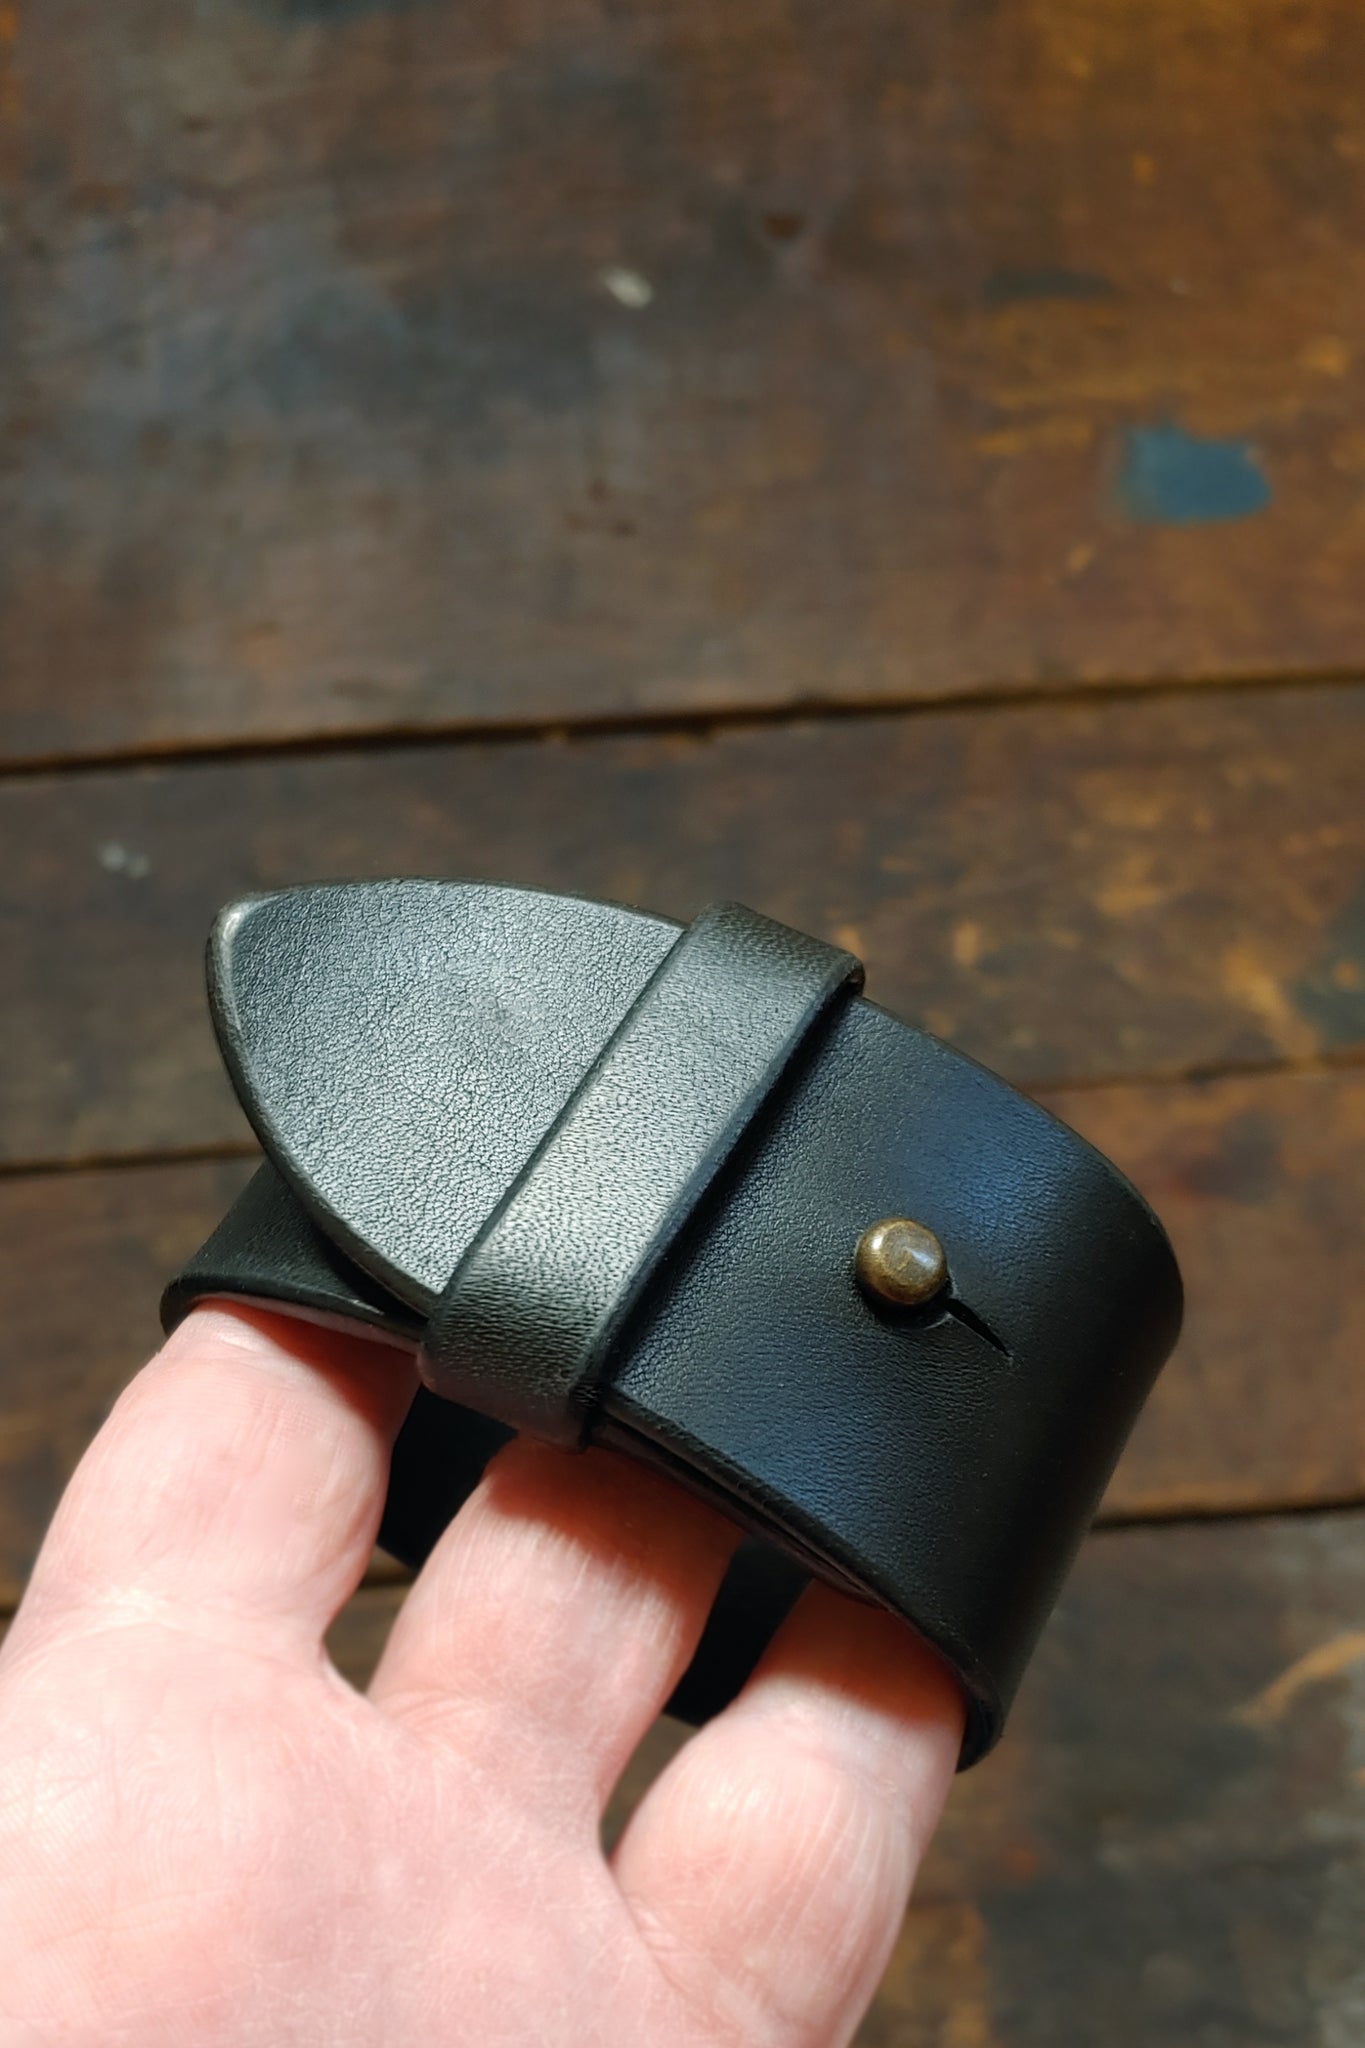 Mao Belt Style Leather Cuff, Nickel or Rhinestone Button Stud, 1.5" or 1" Wide Bracelet